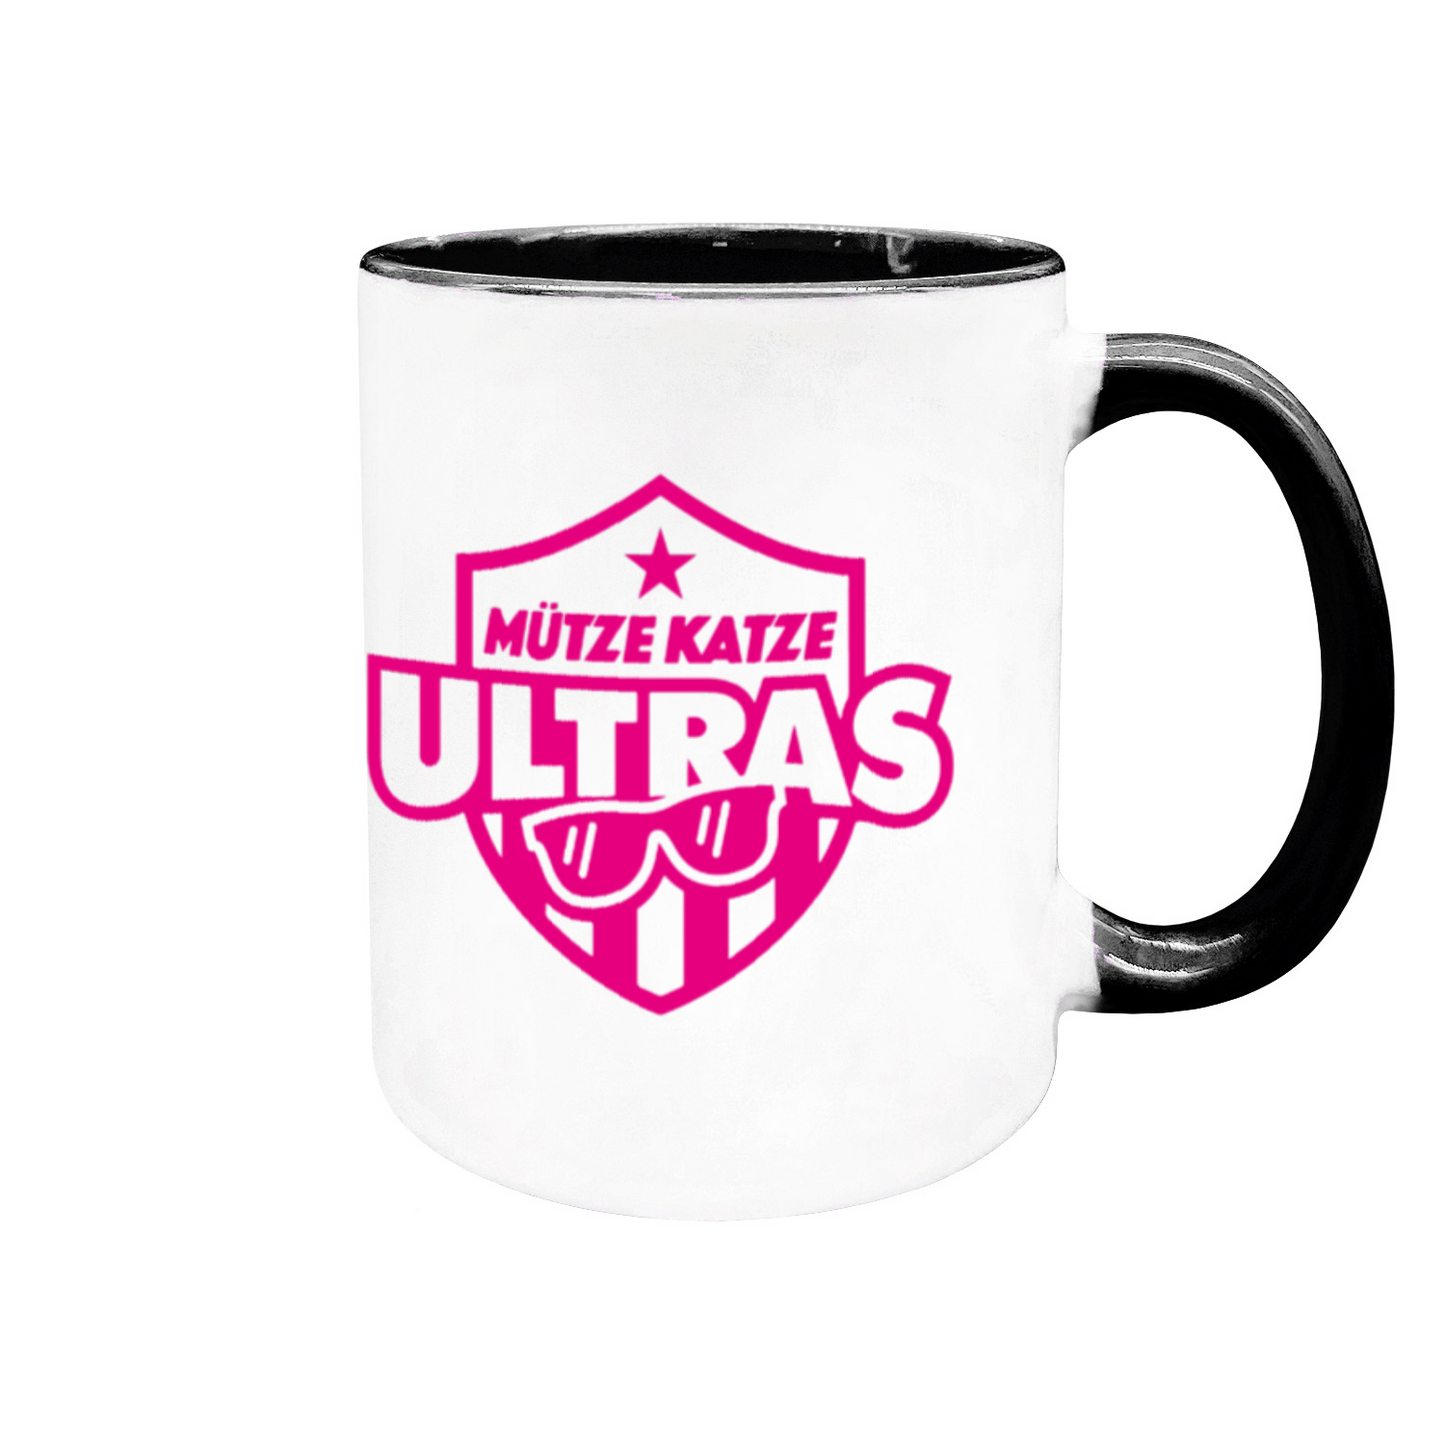 Mütze Katze Ultras - Tasse